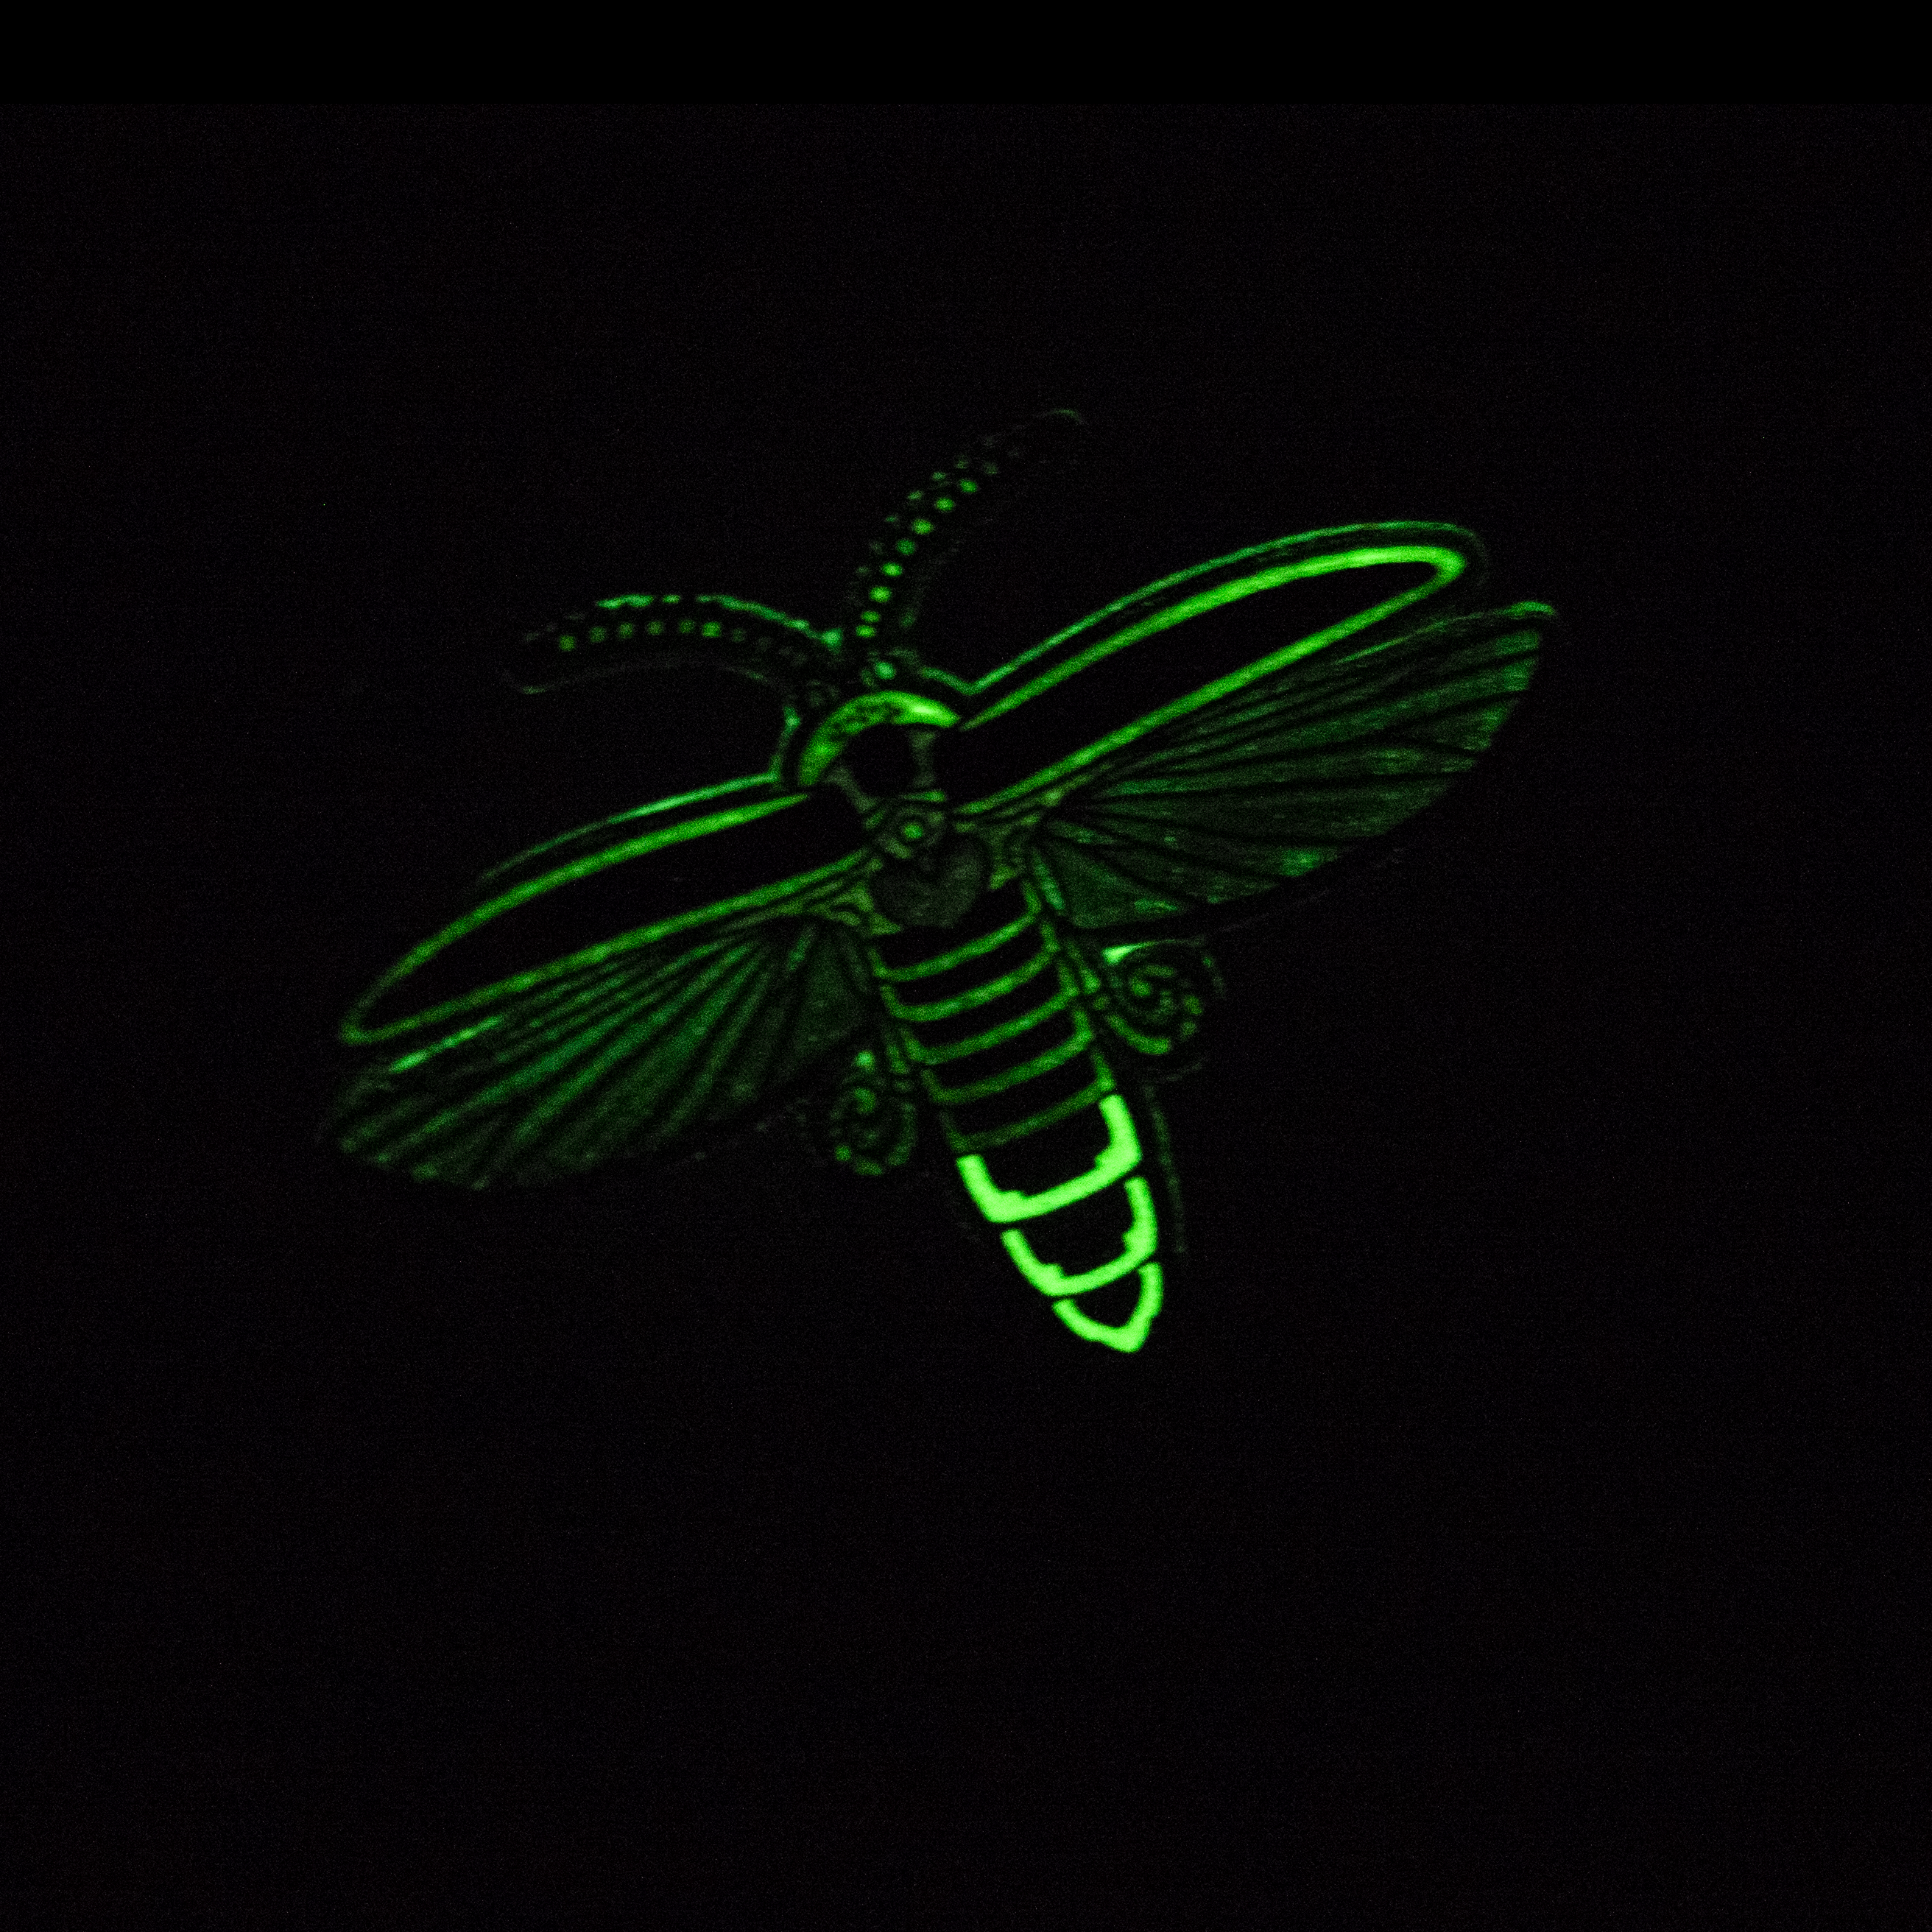 A big dipper firefly enamel pin glowing in the dark.